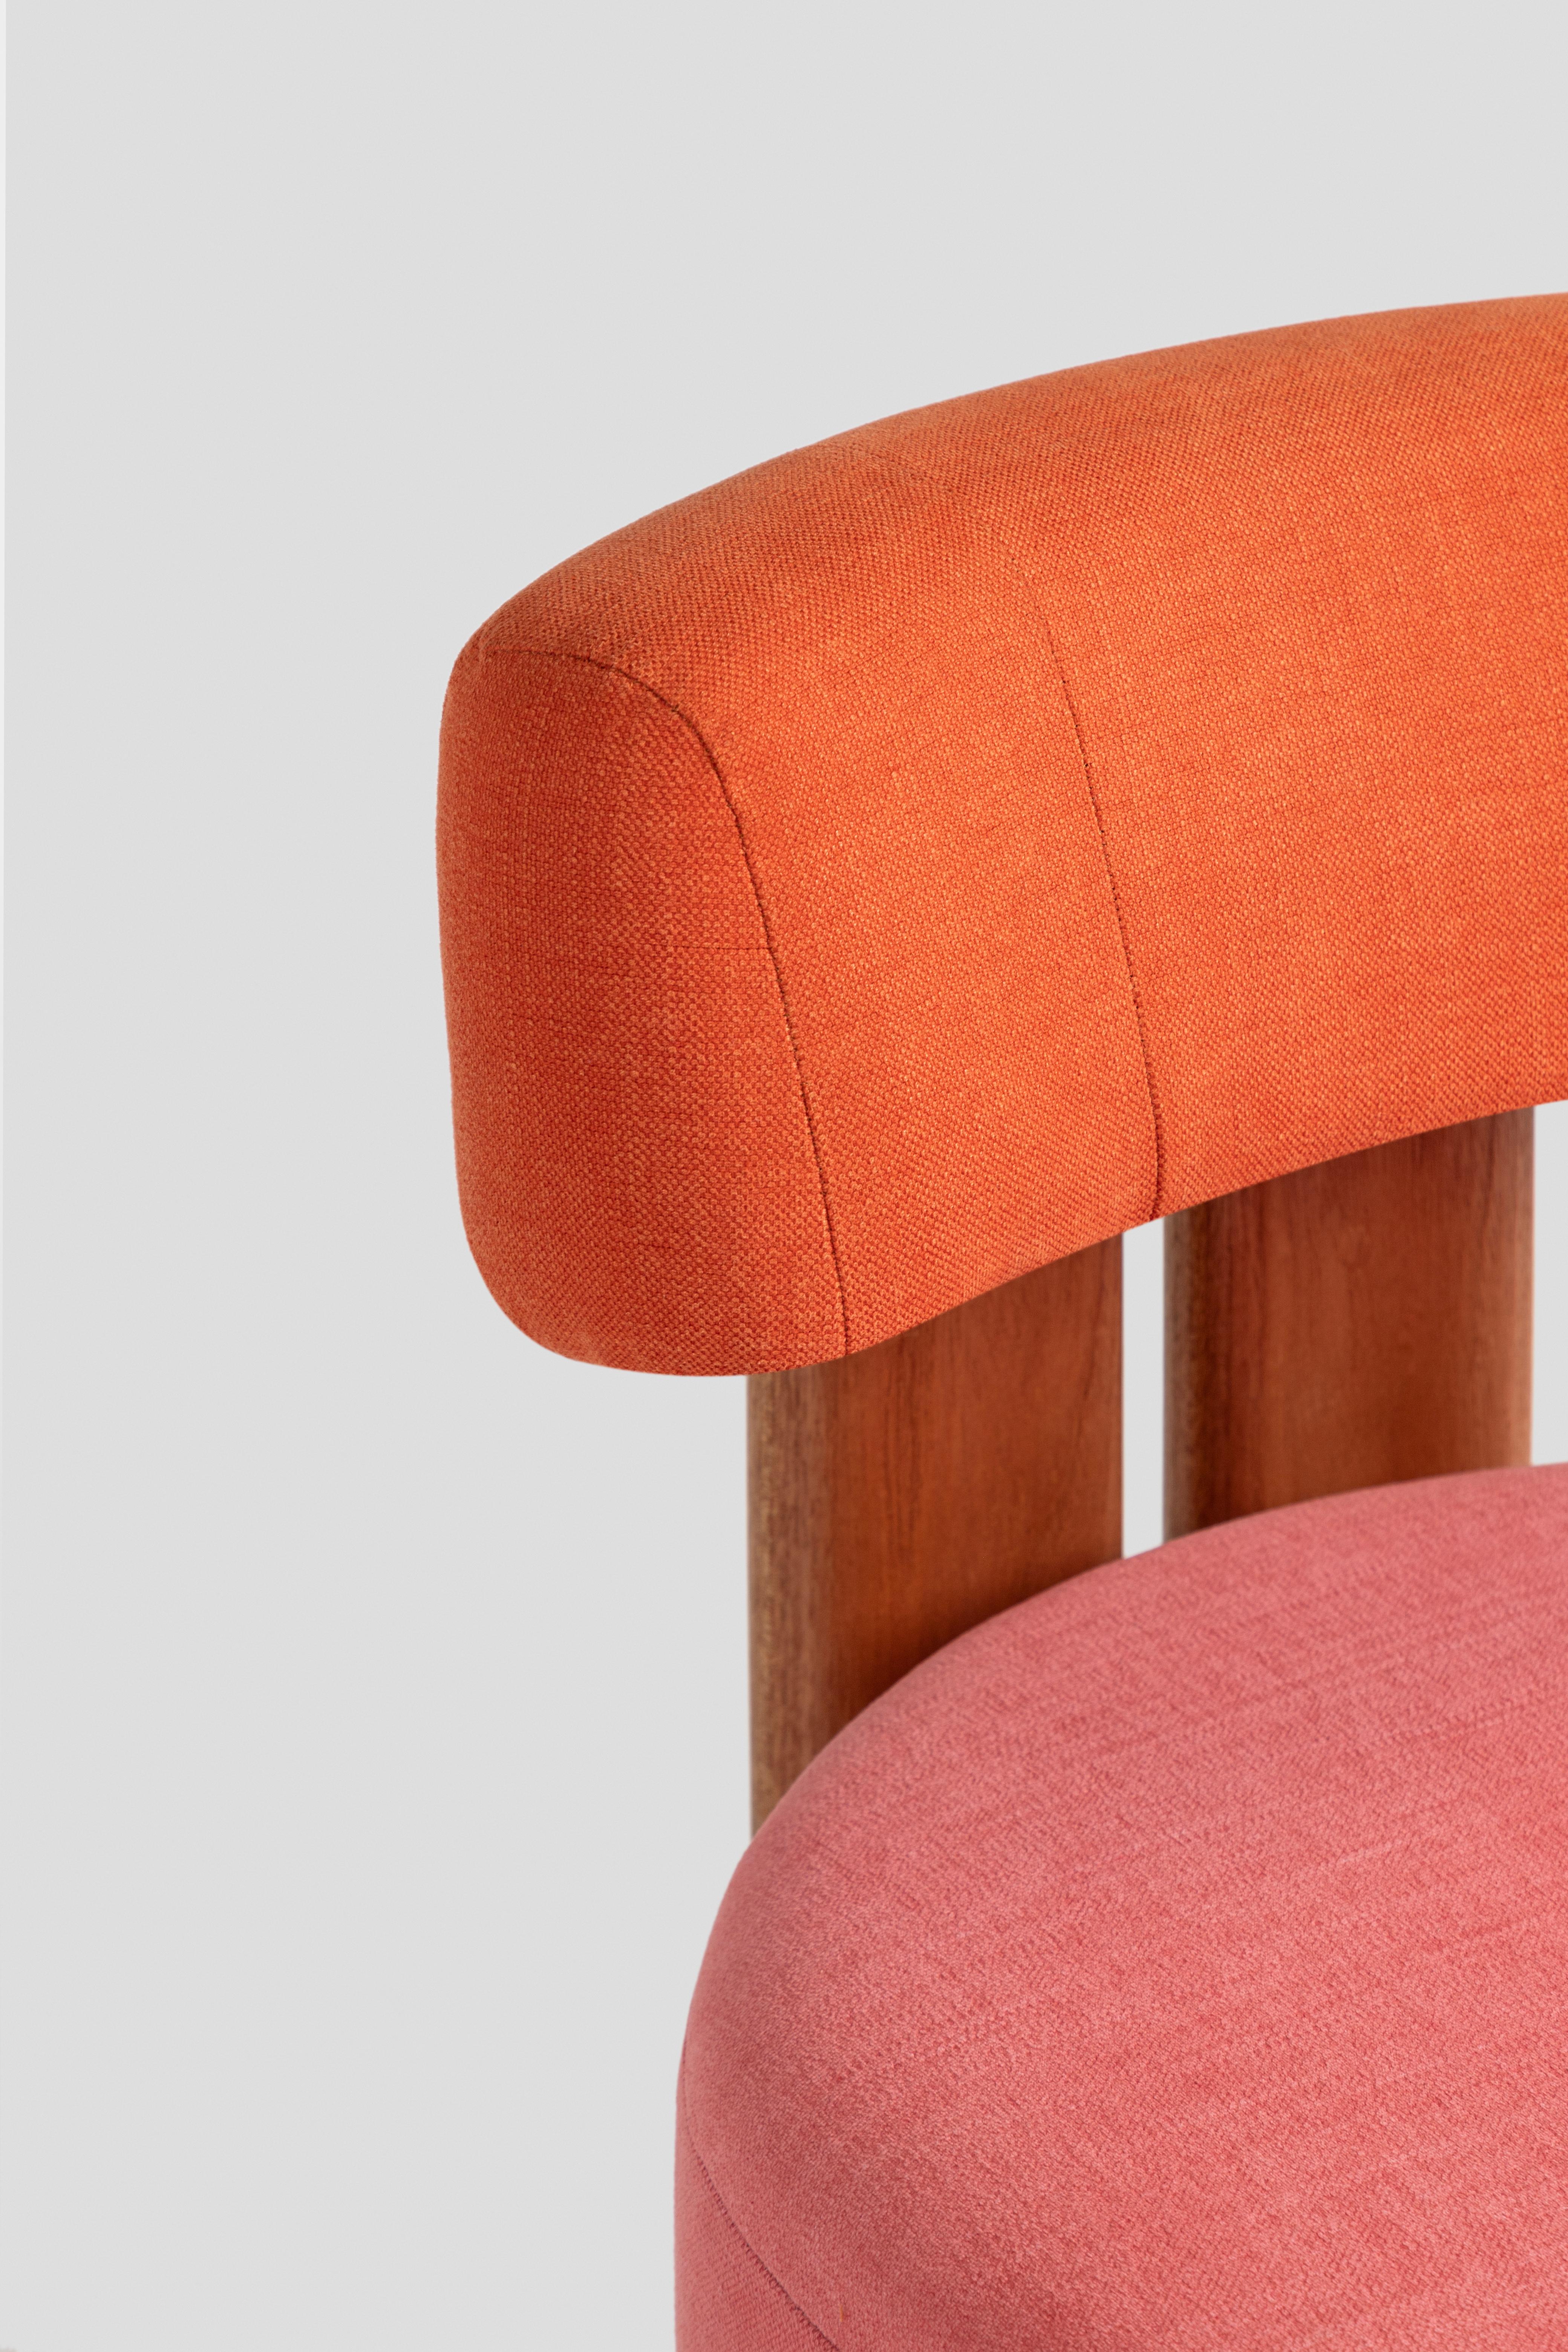 ANNI Toronja De la Paz Low Chair Limited Edition  Contemporary Mexican Design For Sale 5